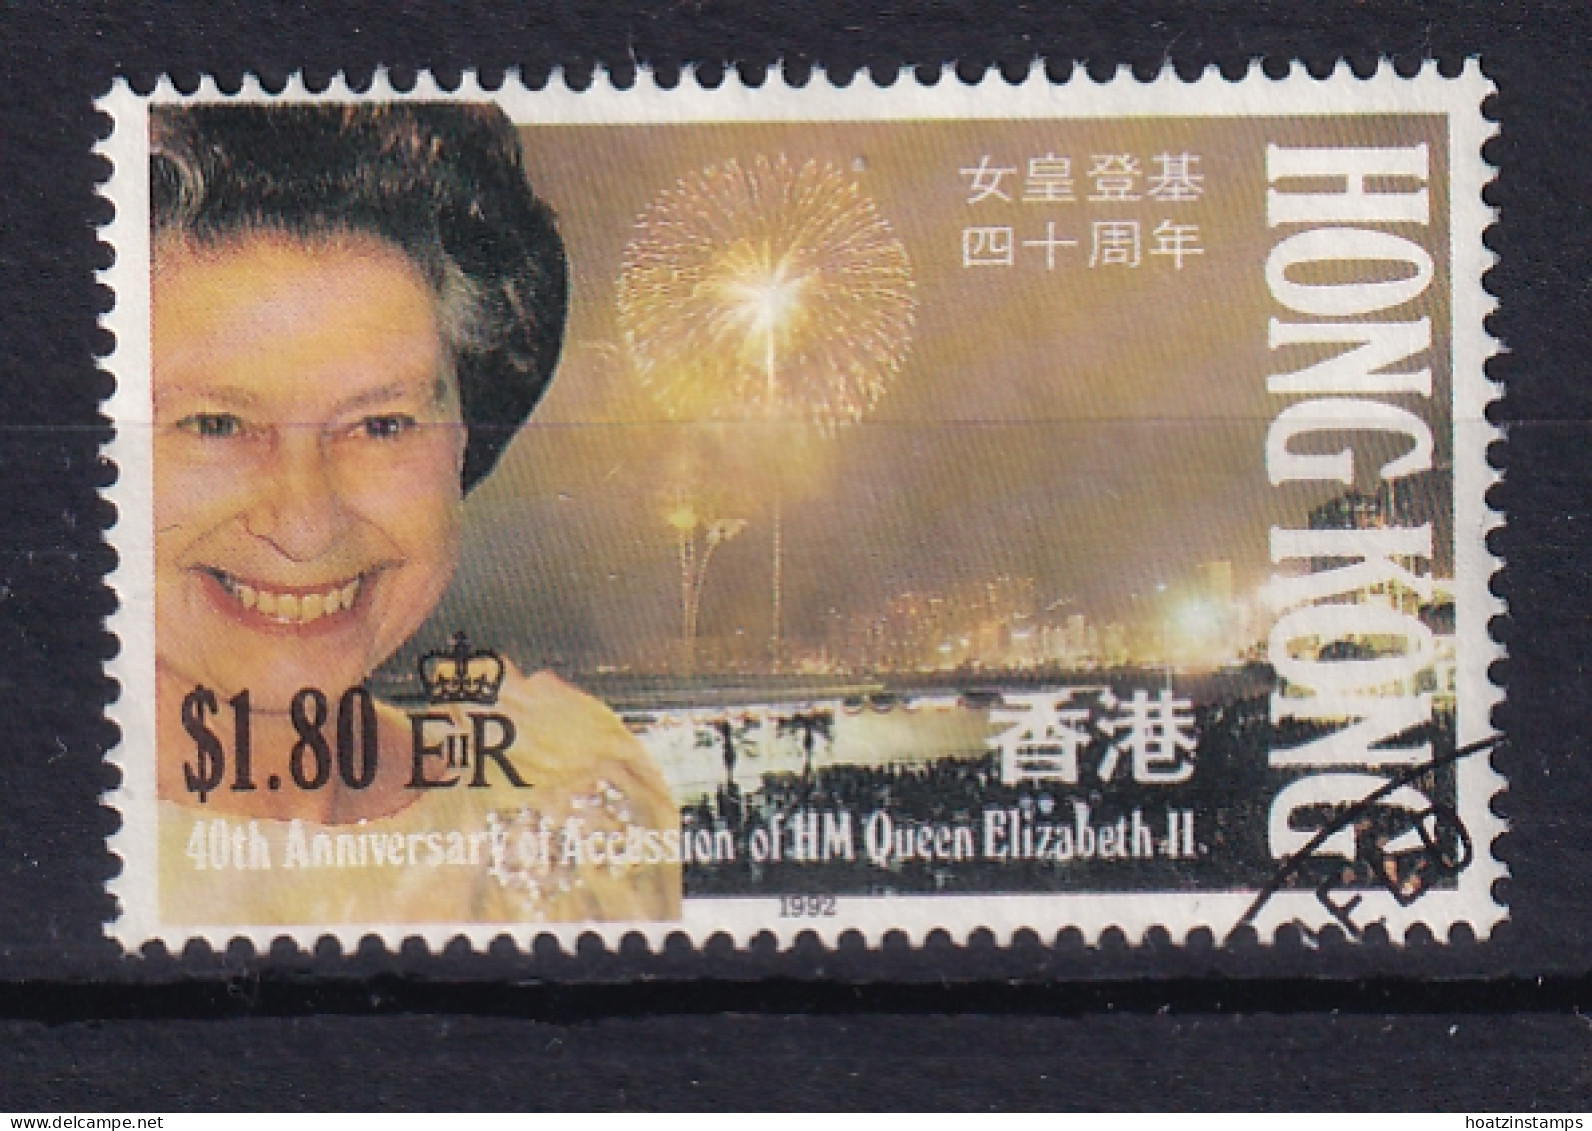 Hong Kong: 1992   40th Anniv Of QE II Accession   SG693    $1.80   Used  - Gebraucht